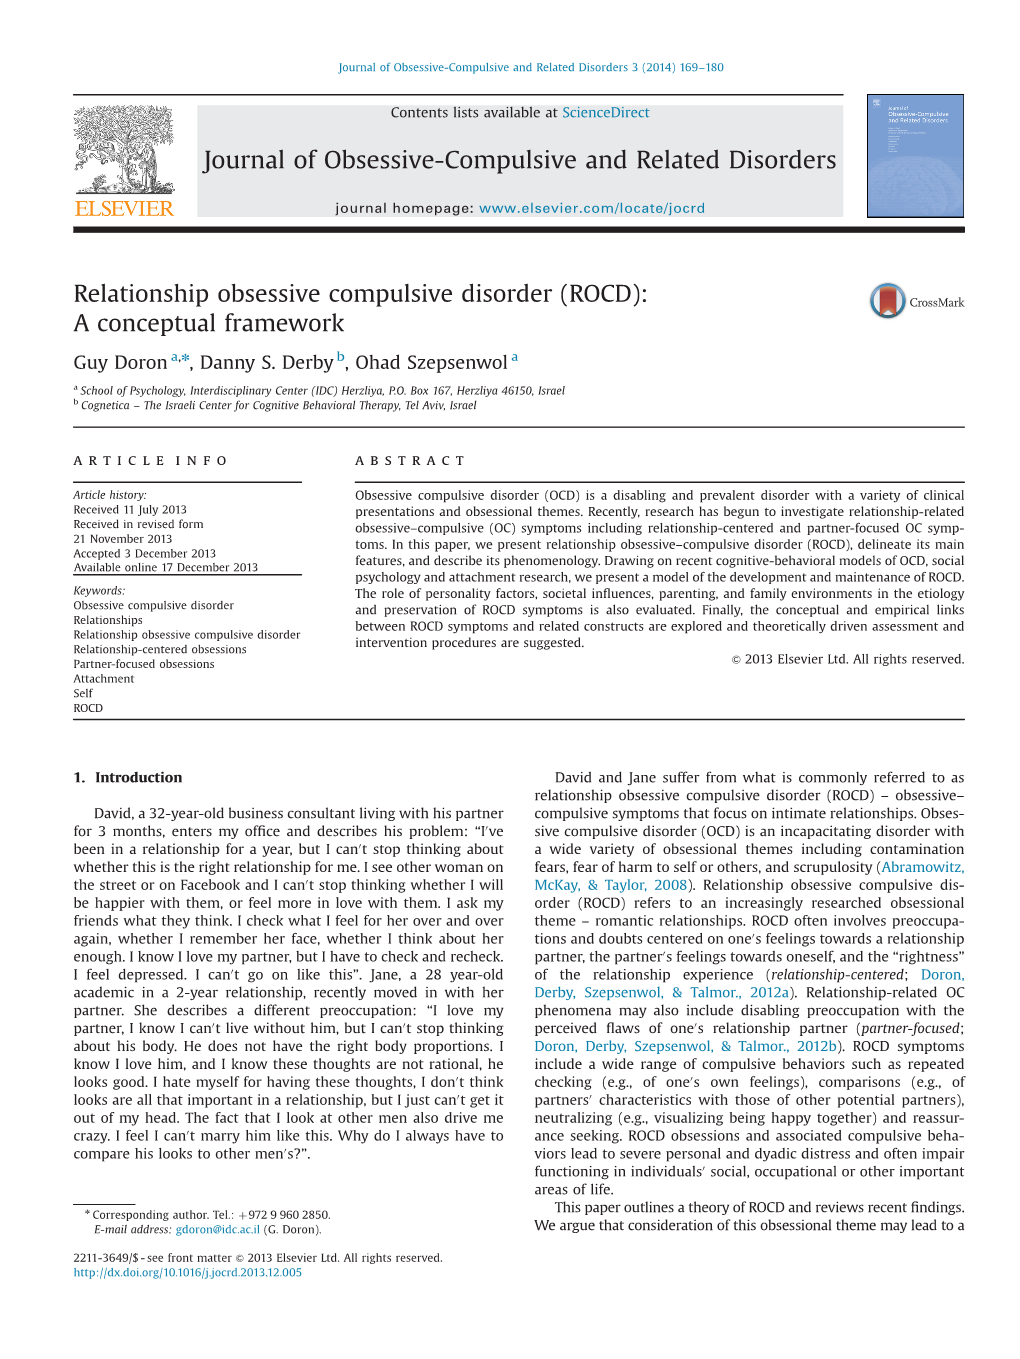 Relationship Obsessive Compulsive Disorder (ROCD): a Conceptual Framework